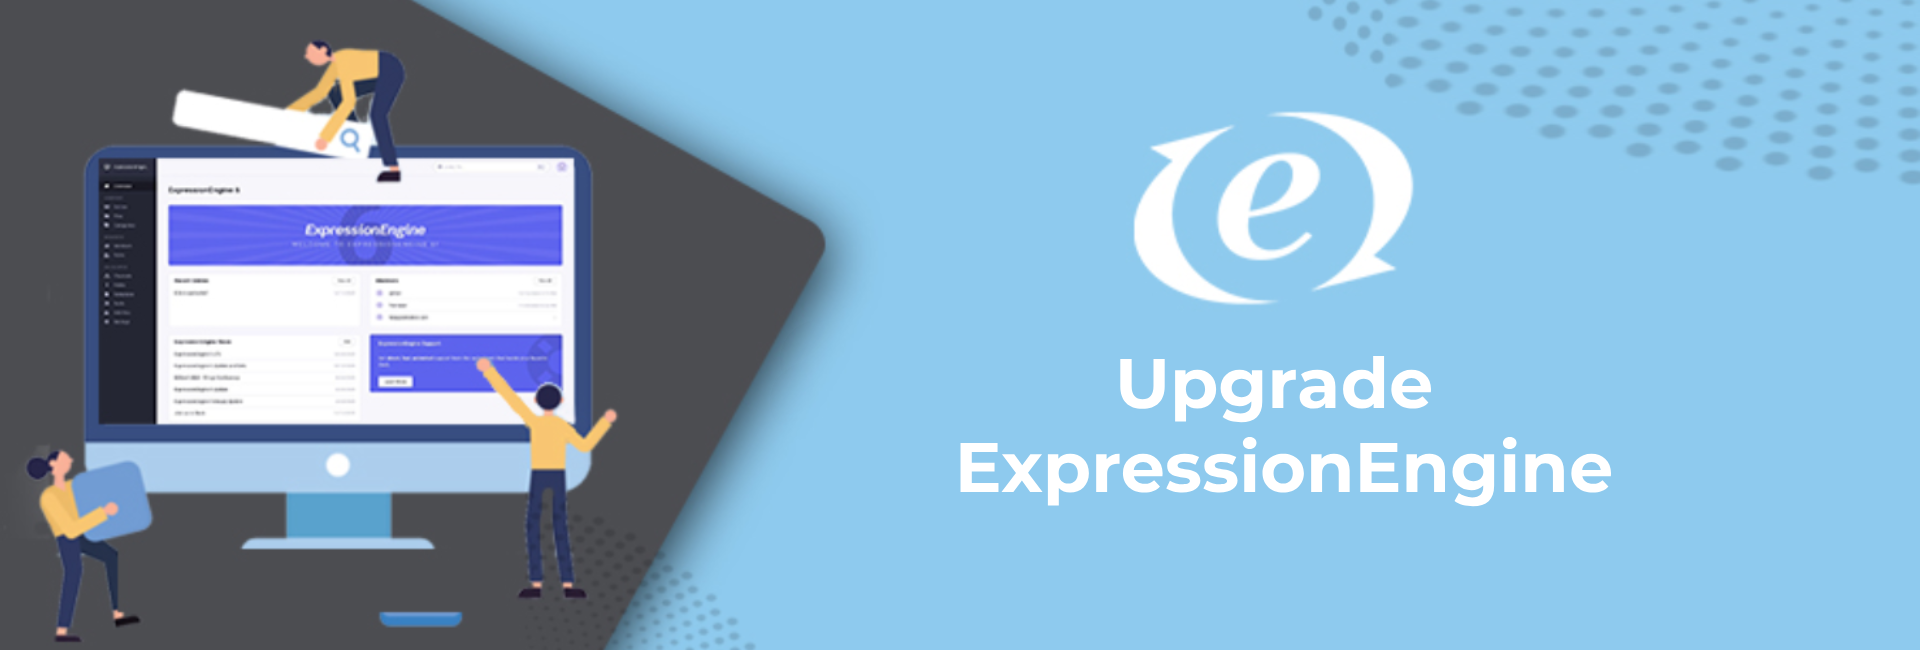 Image of Upgrade ExpressionEngine